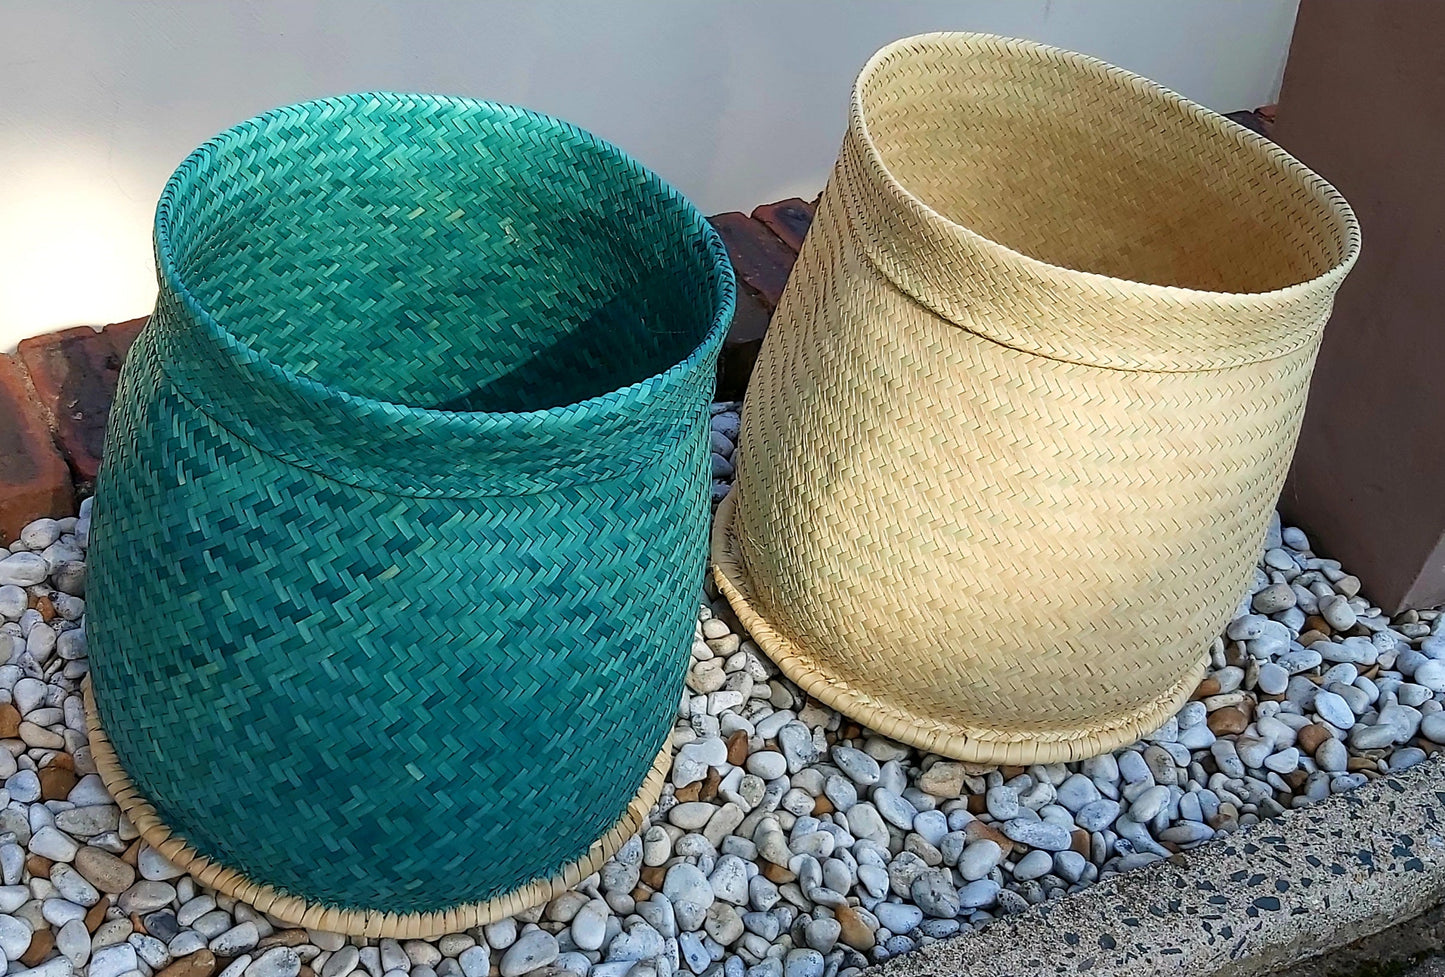 Woven Basket Storage/ Planter